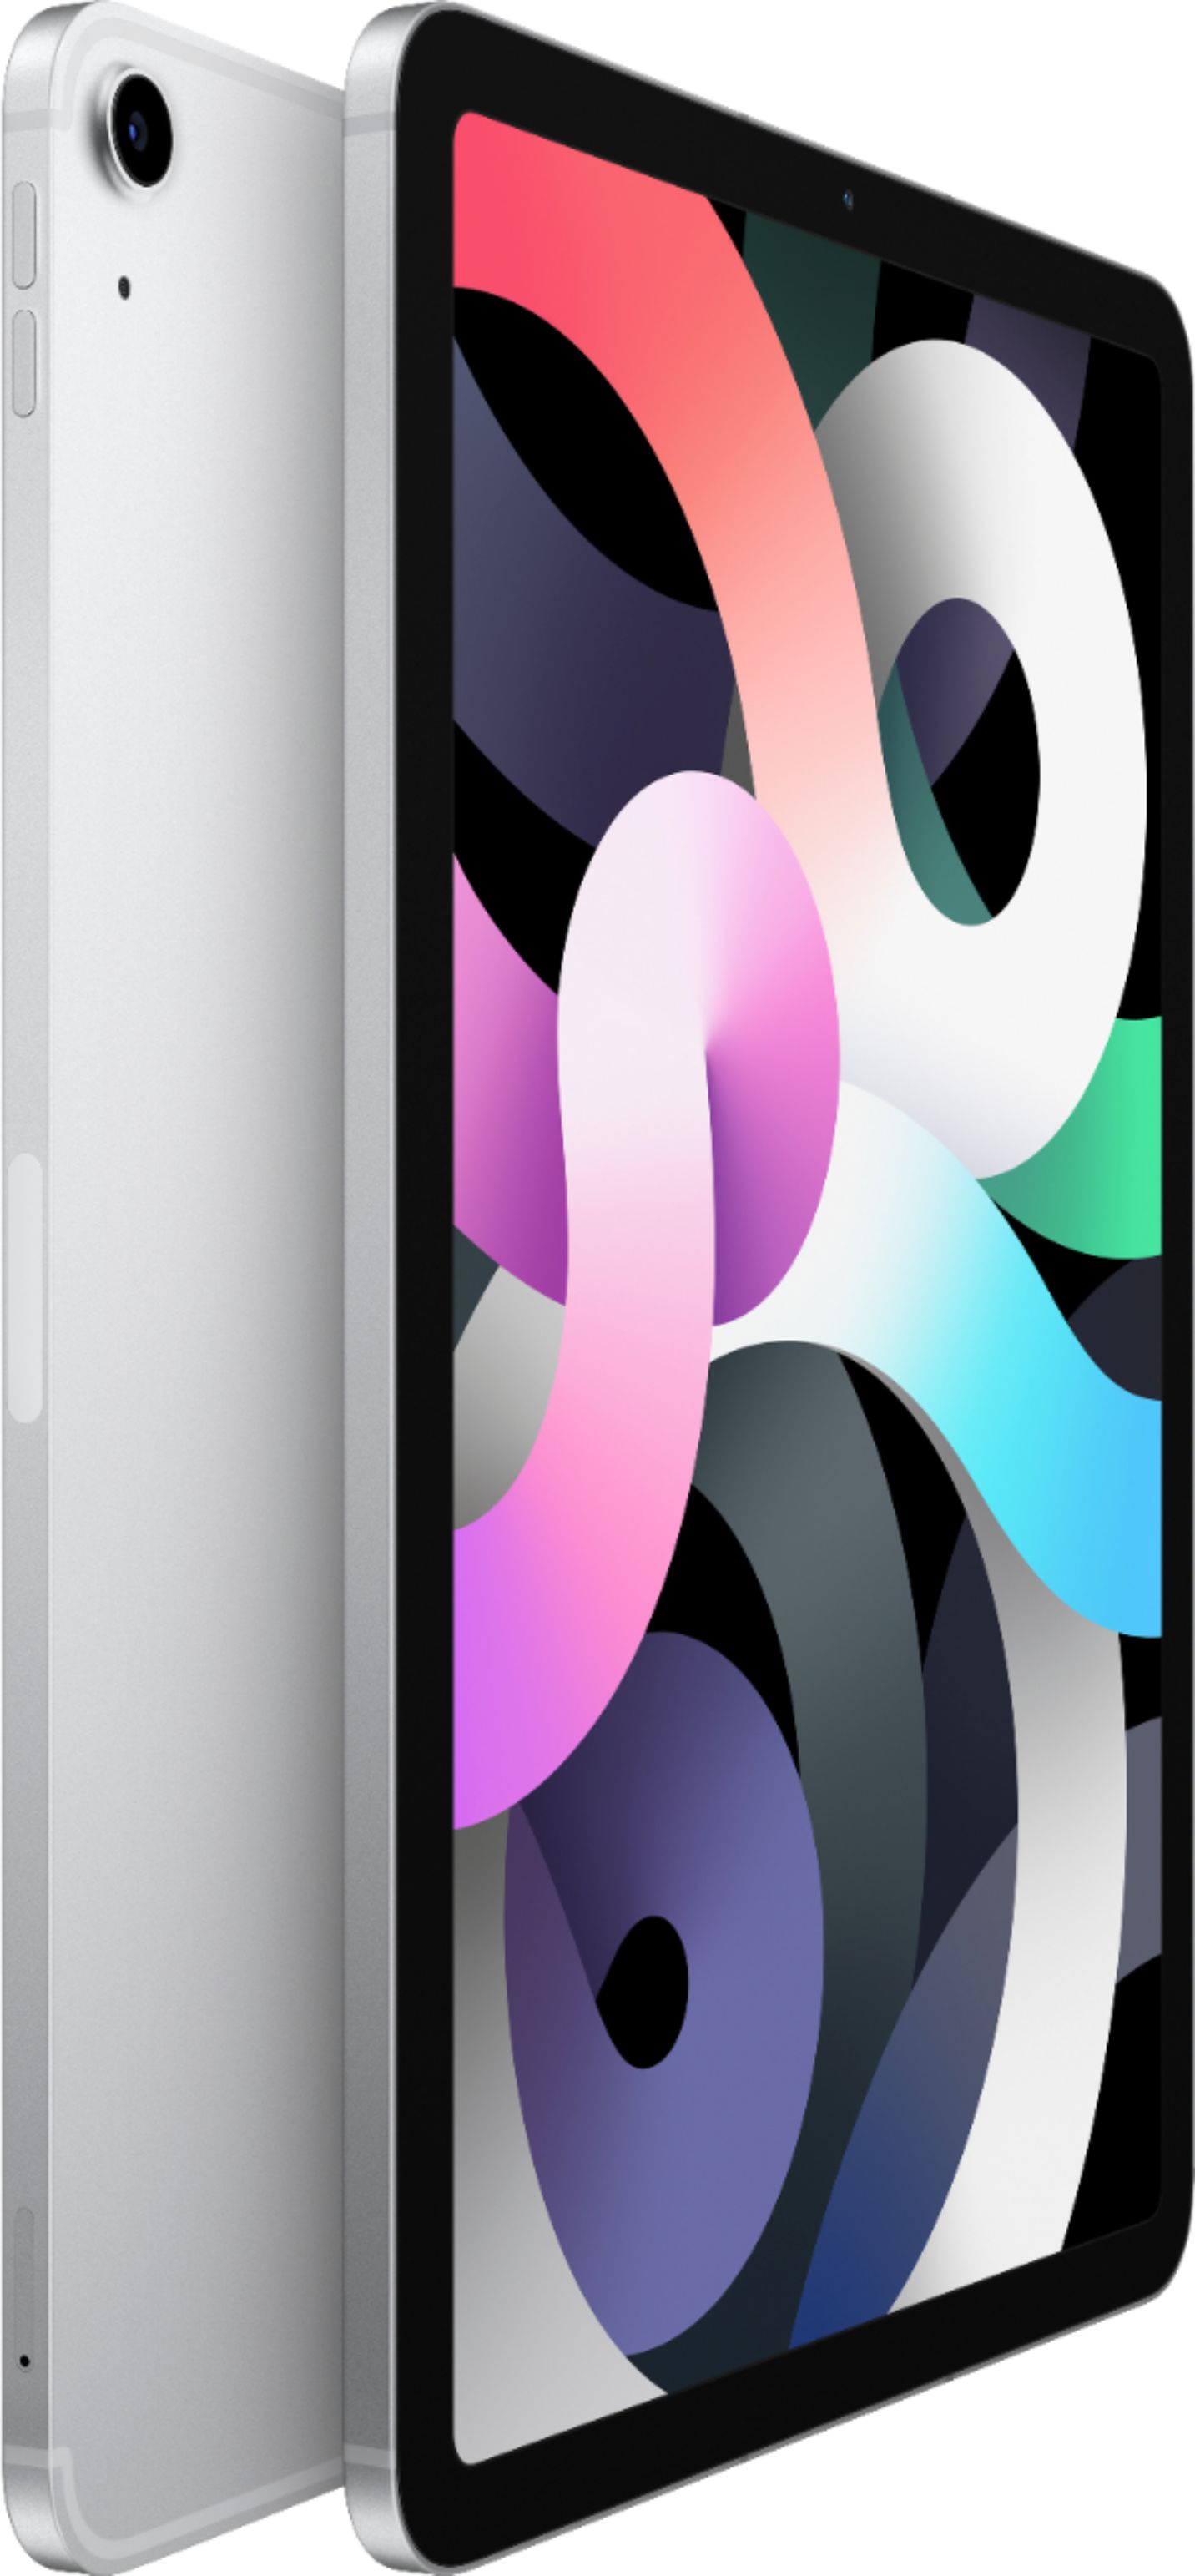 kromatski u zabludi vuk  Apple 10.9-Inch iPad Air (4th Generation) with Wi-Fi 64GB Silver MYFN2LL/A  - Best Buy